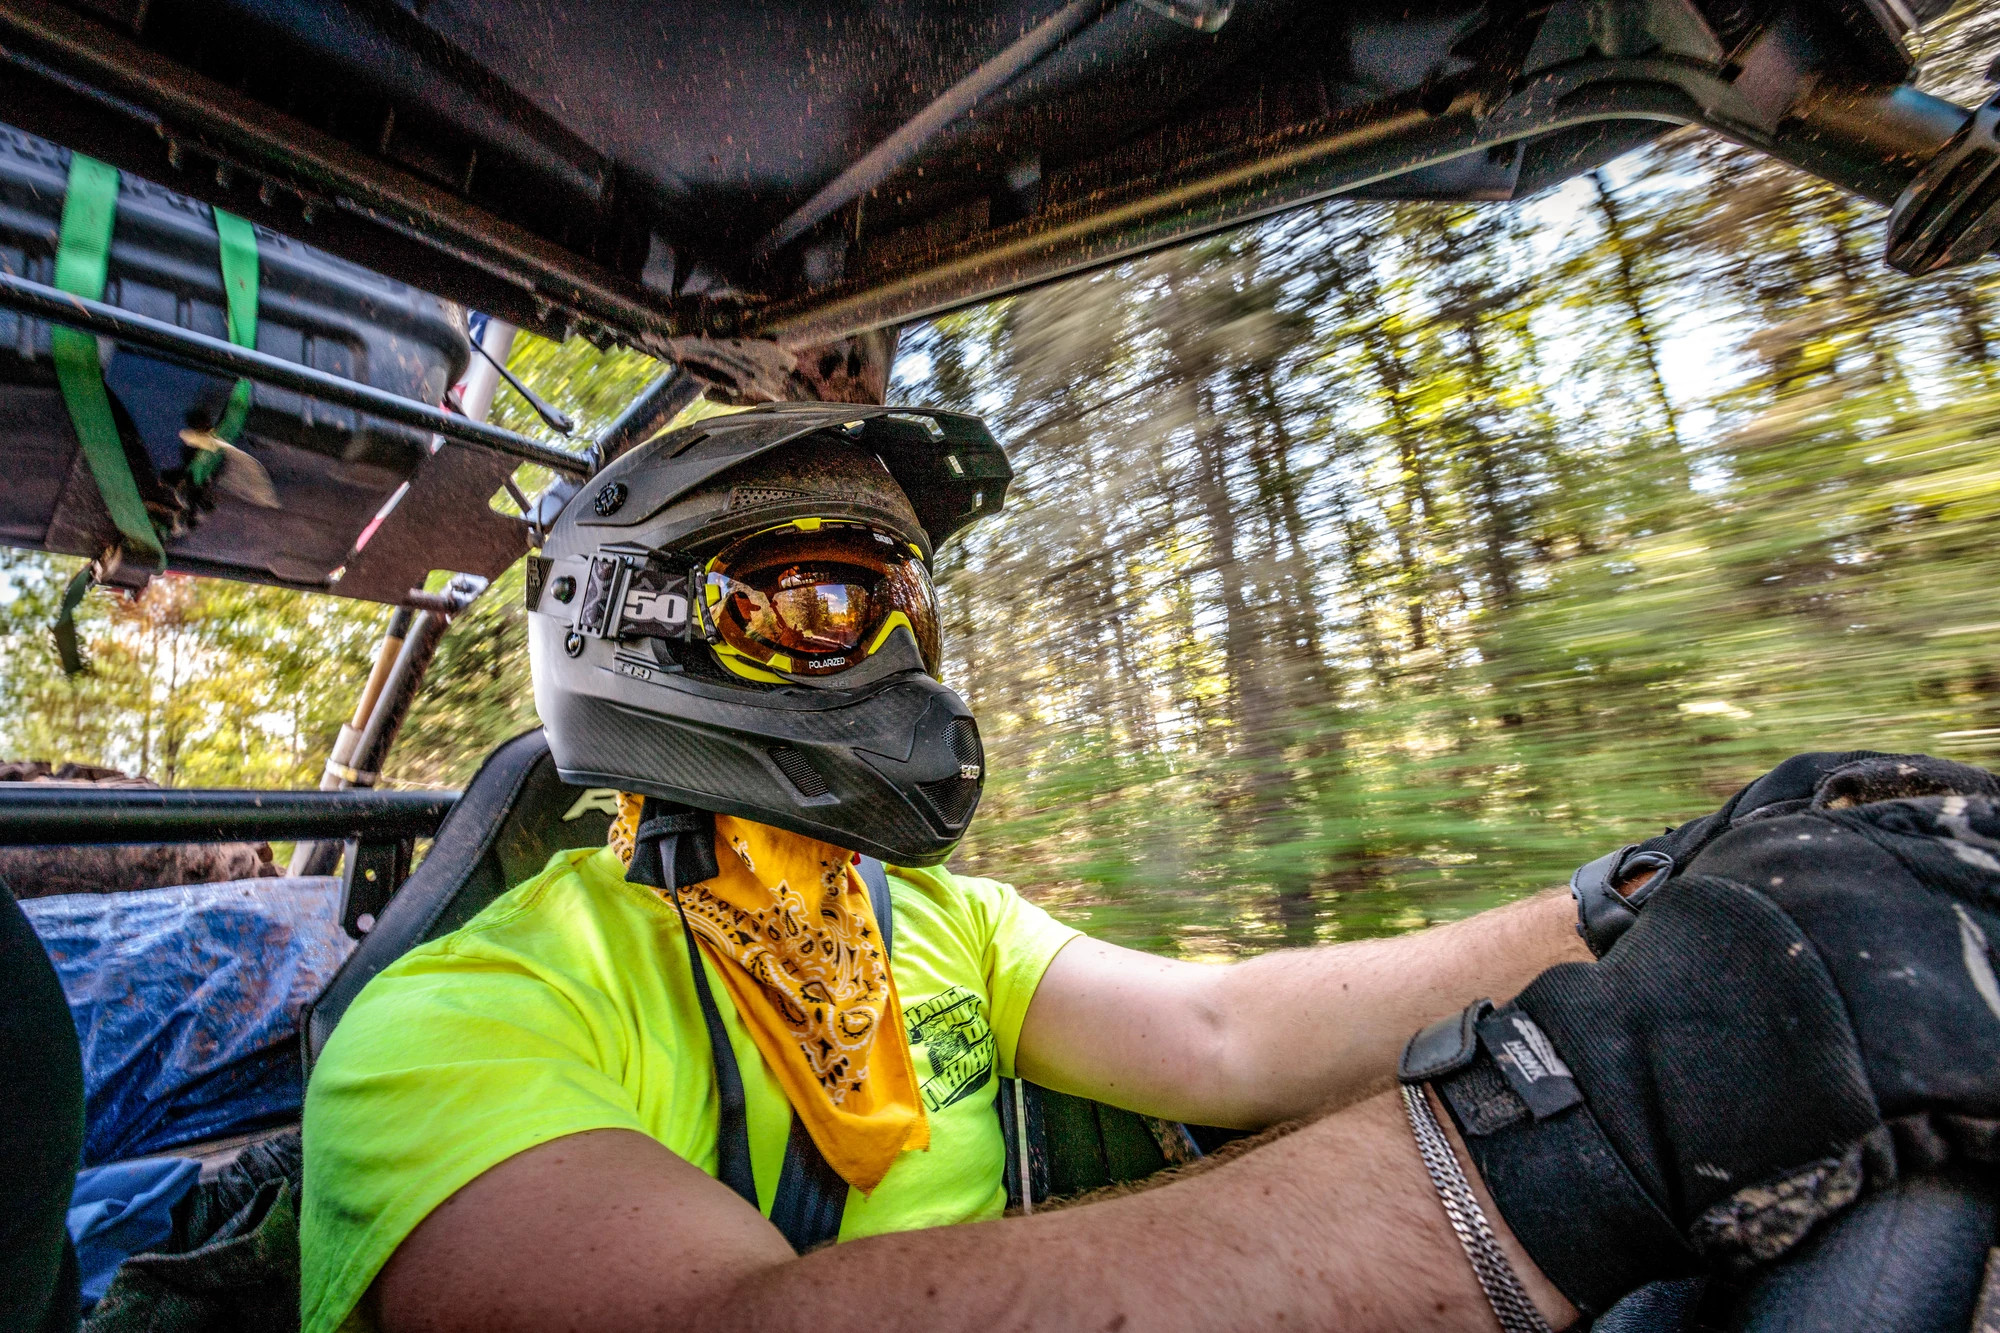 man wearing helmet driving ATV